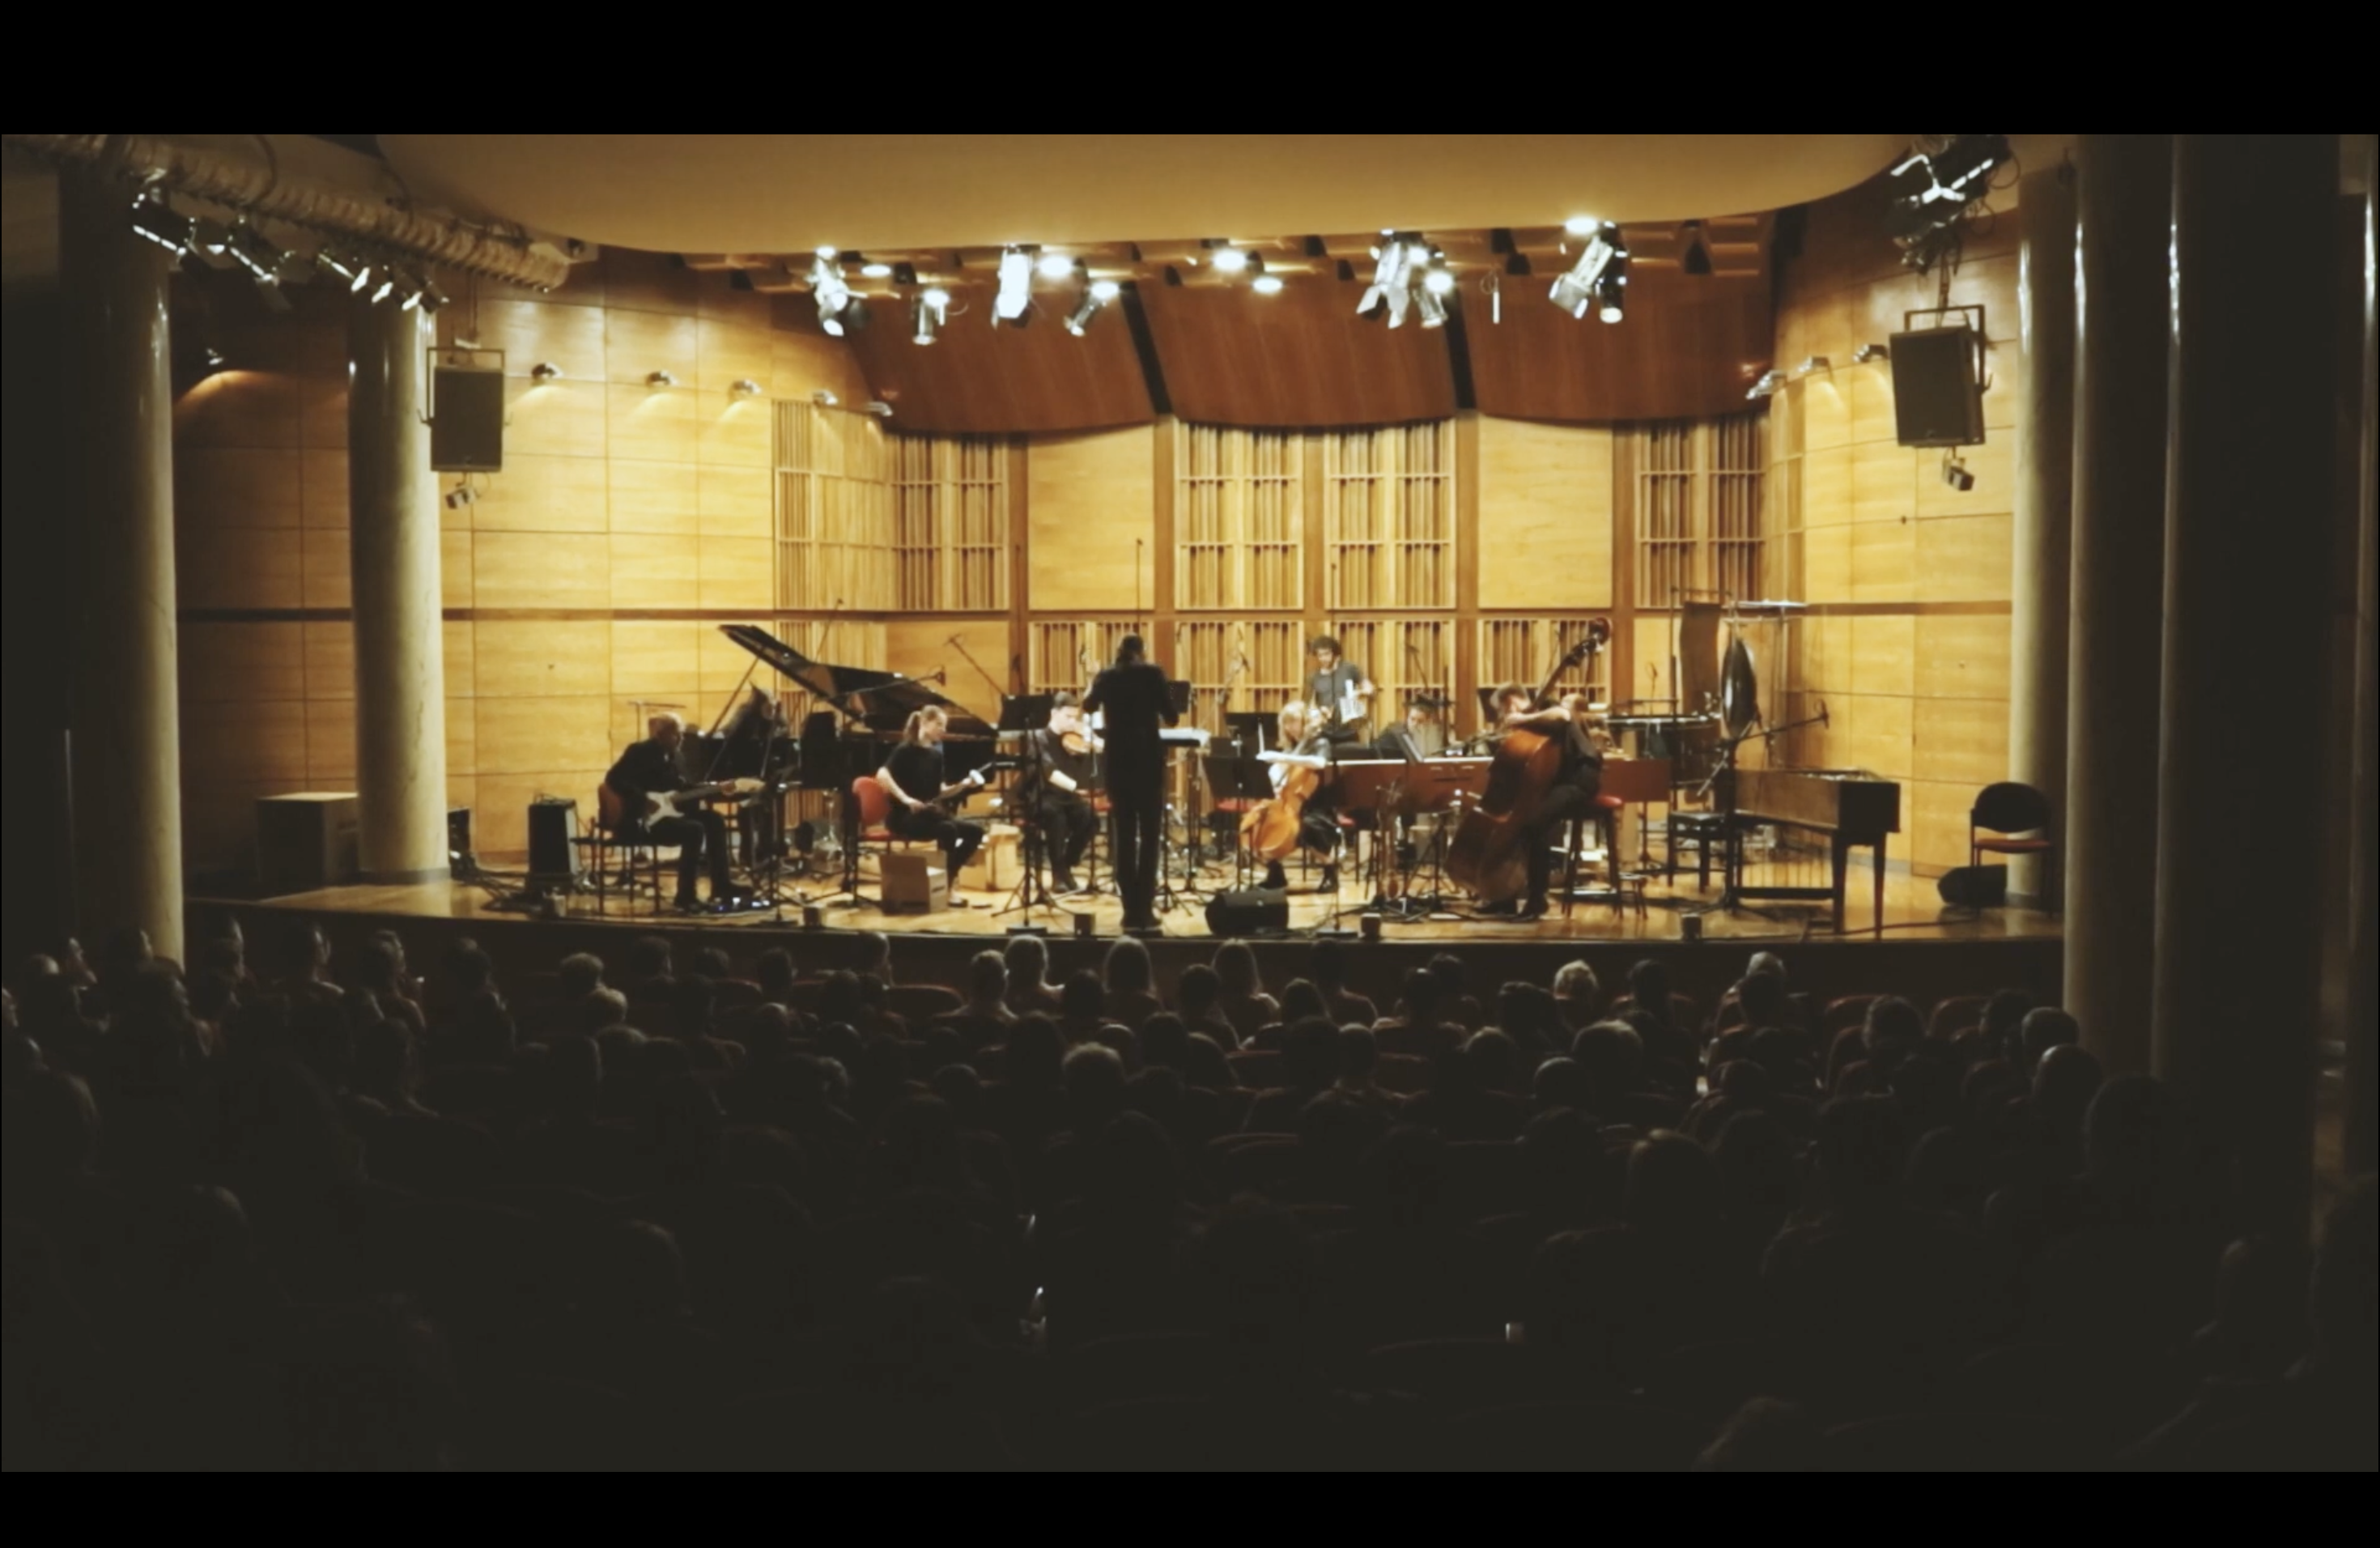 RIOT ENSEMBLE / BARA GISLADOTTIR / SKY MACKLAY, Warsaw Philharmonic, Chamber Hall